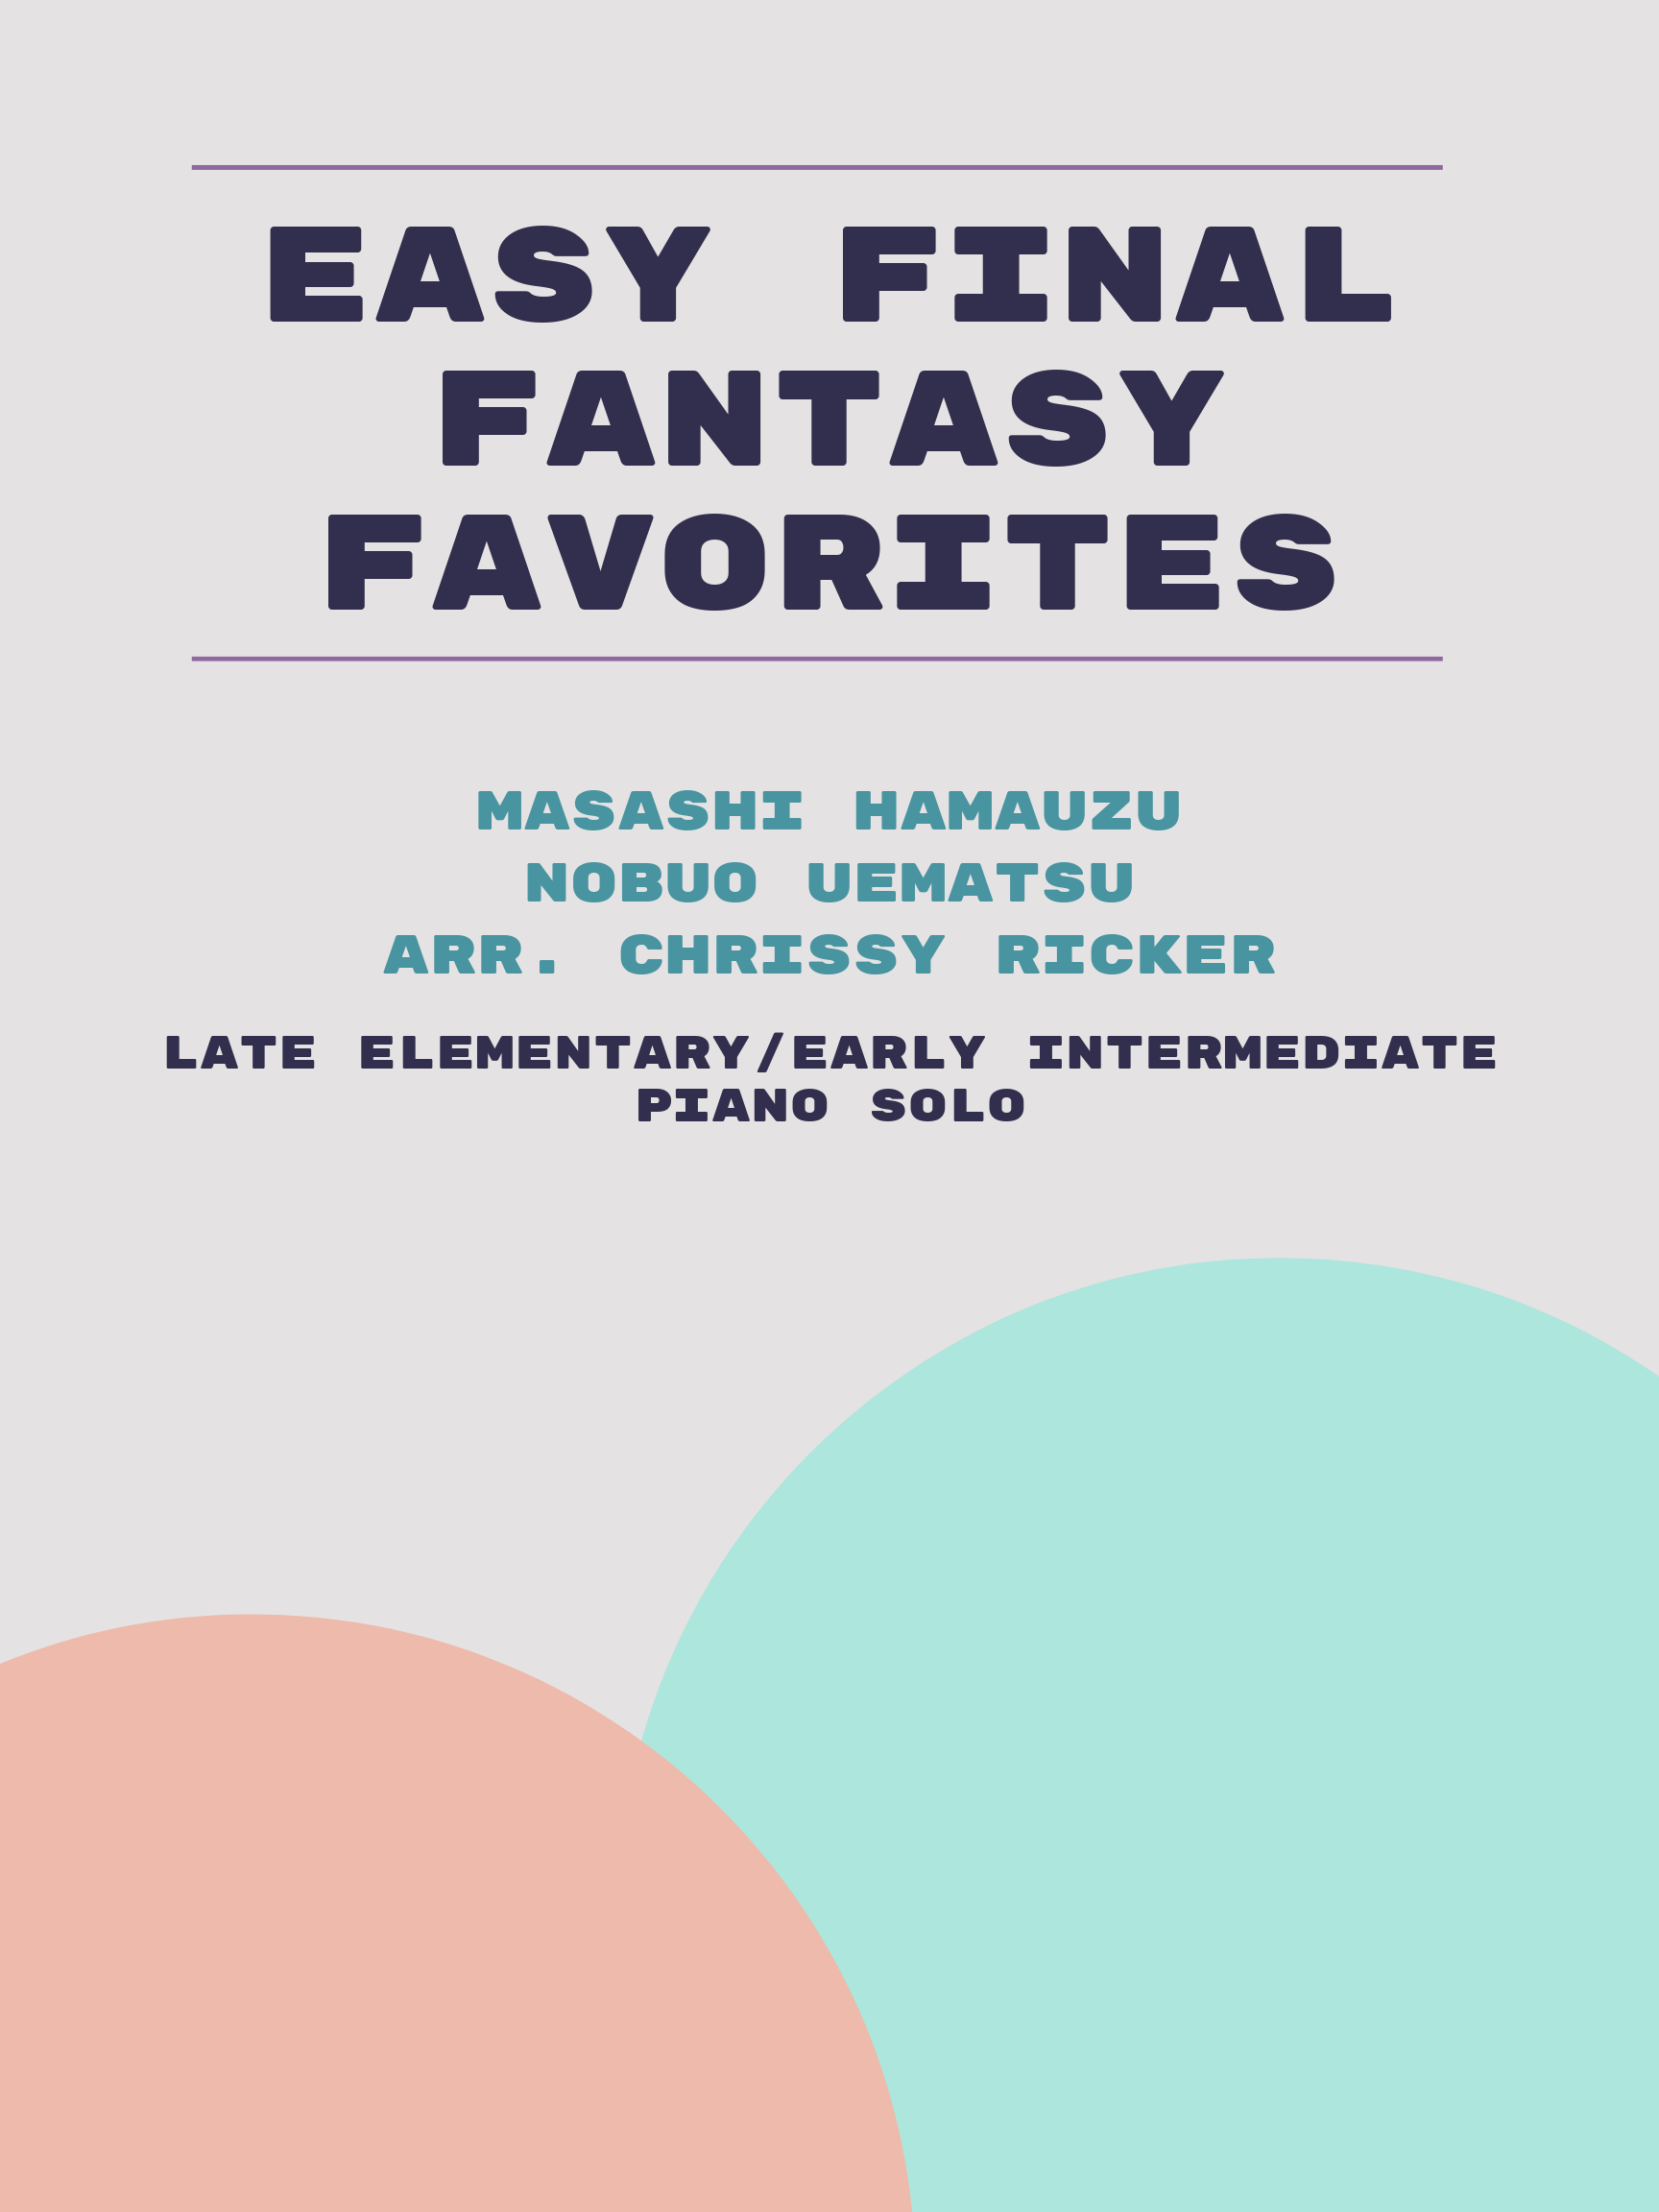 Easy Final Fantasy Favorites by Masashi Hamauzu, Nobuo Uematsu